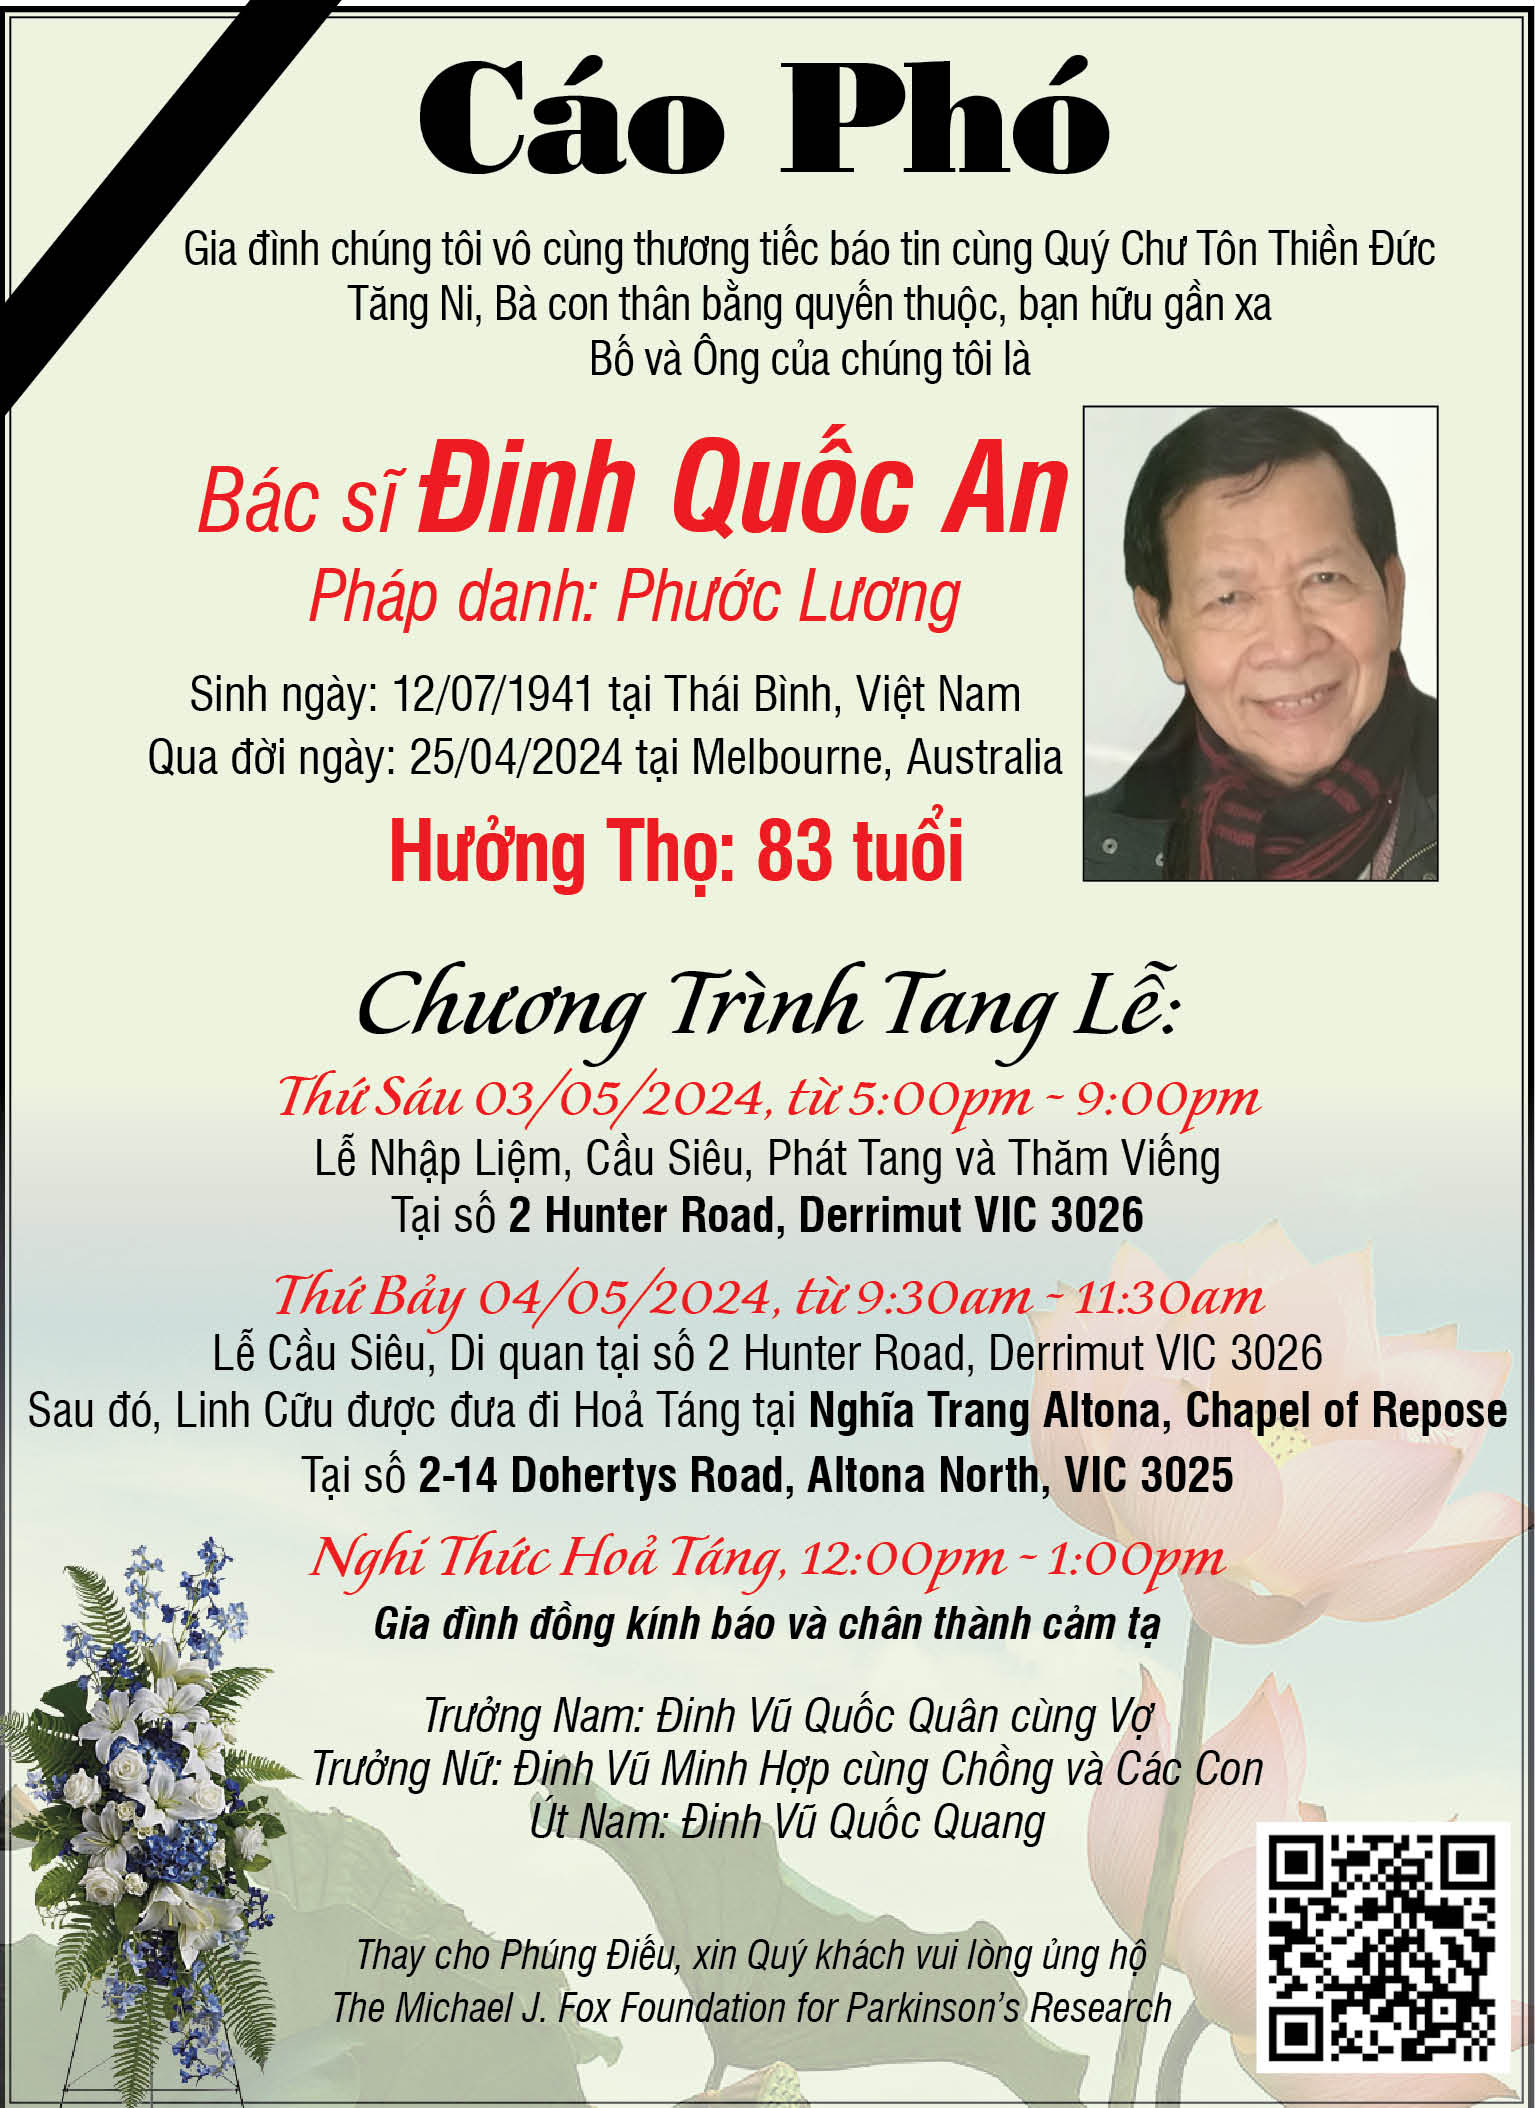 Cáo Phó Dr Dinh Quoc An